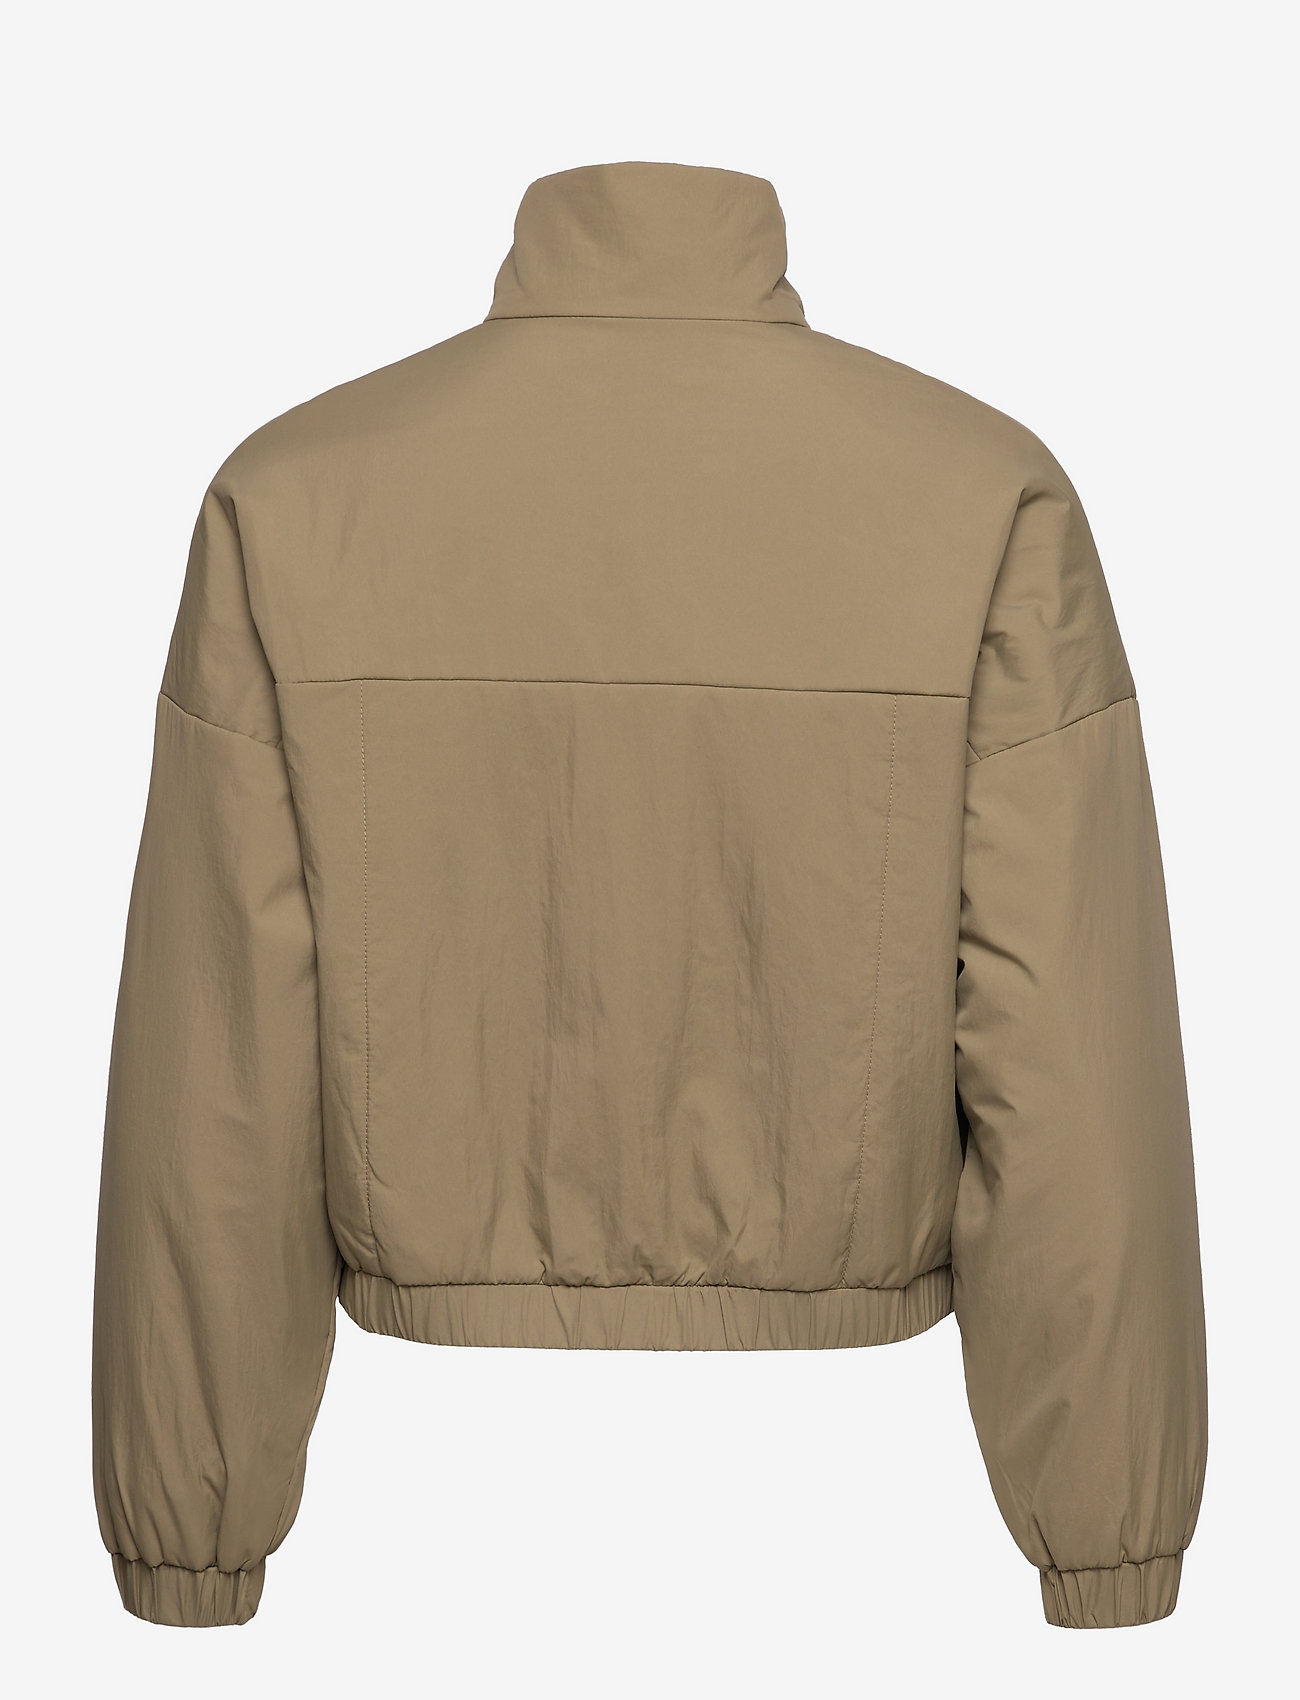 PUMA - Infuse Soft Padded Woven Jacket - winter jacket - covert green - 1